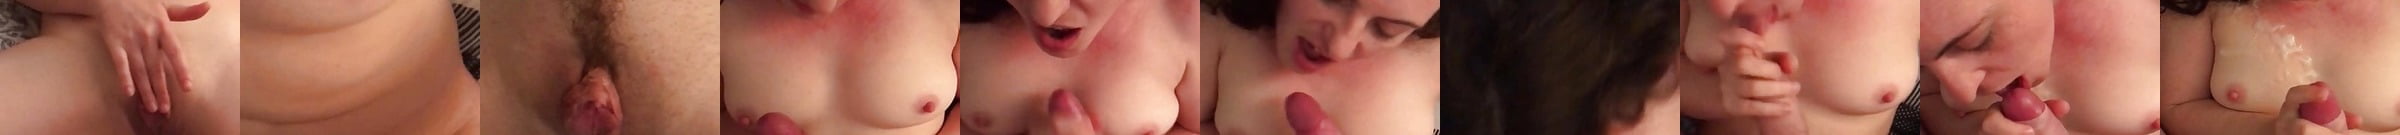 MILF Jerks Cum Onto Her Hard Nipples HD Porn E3 XHamster XHamster